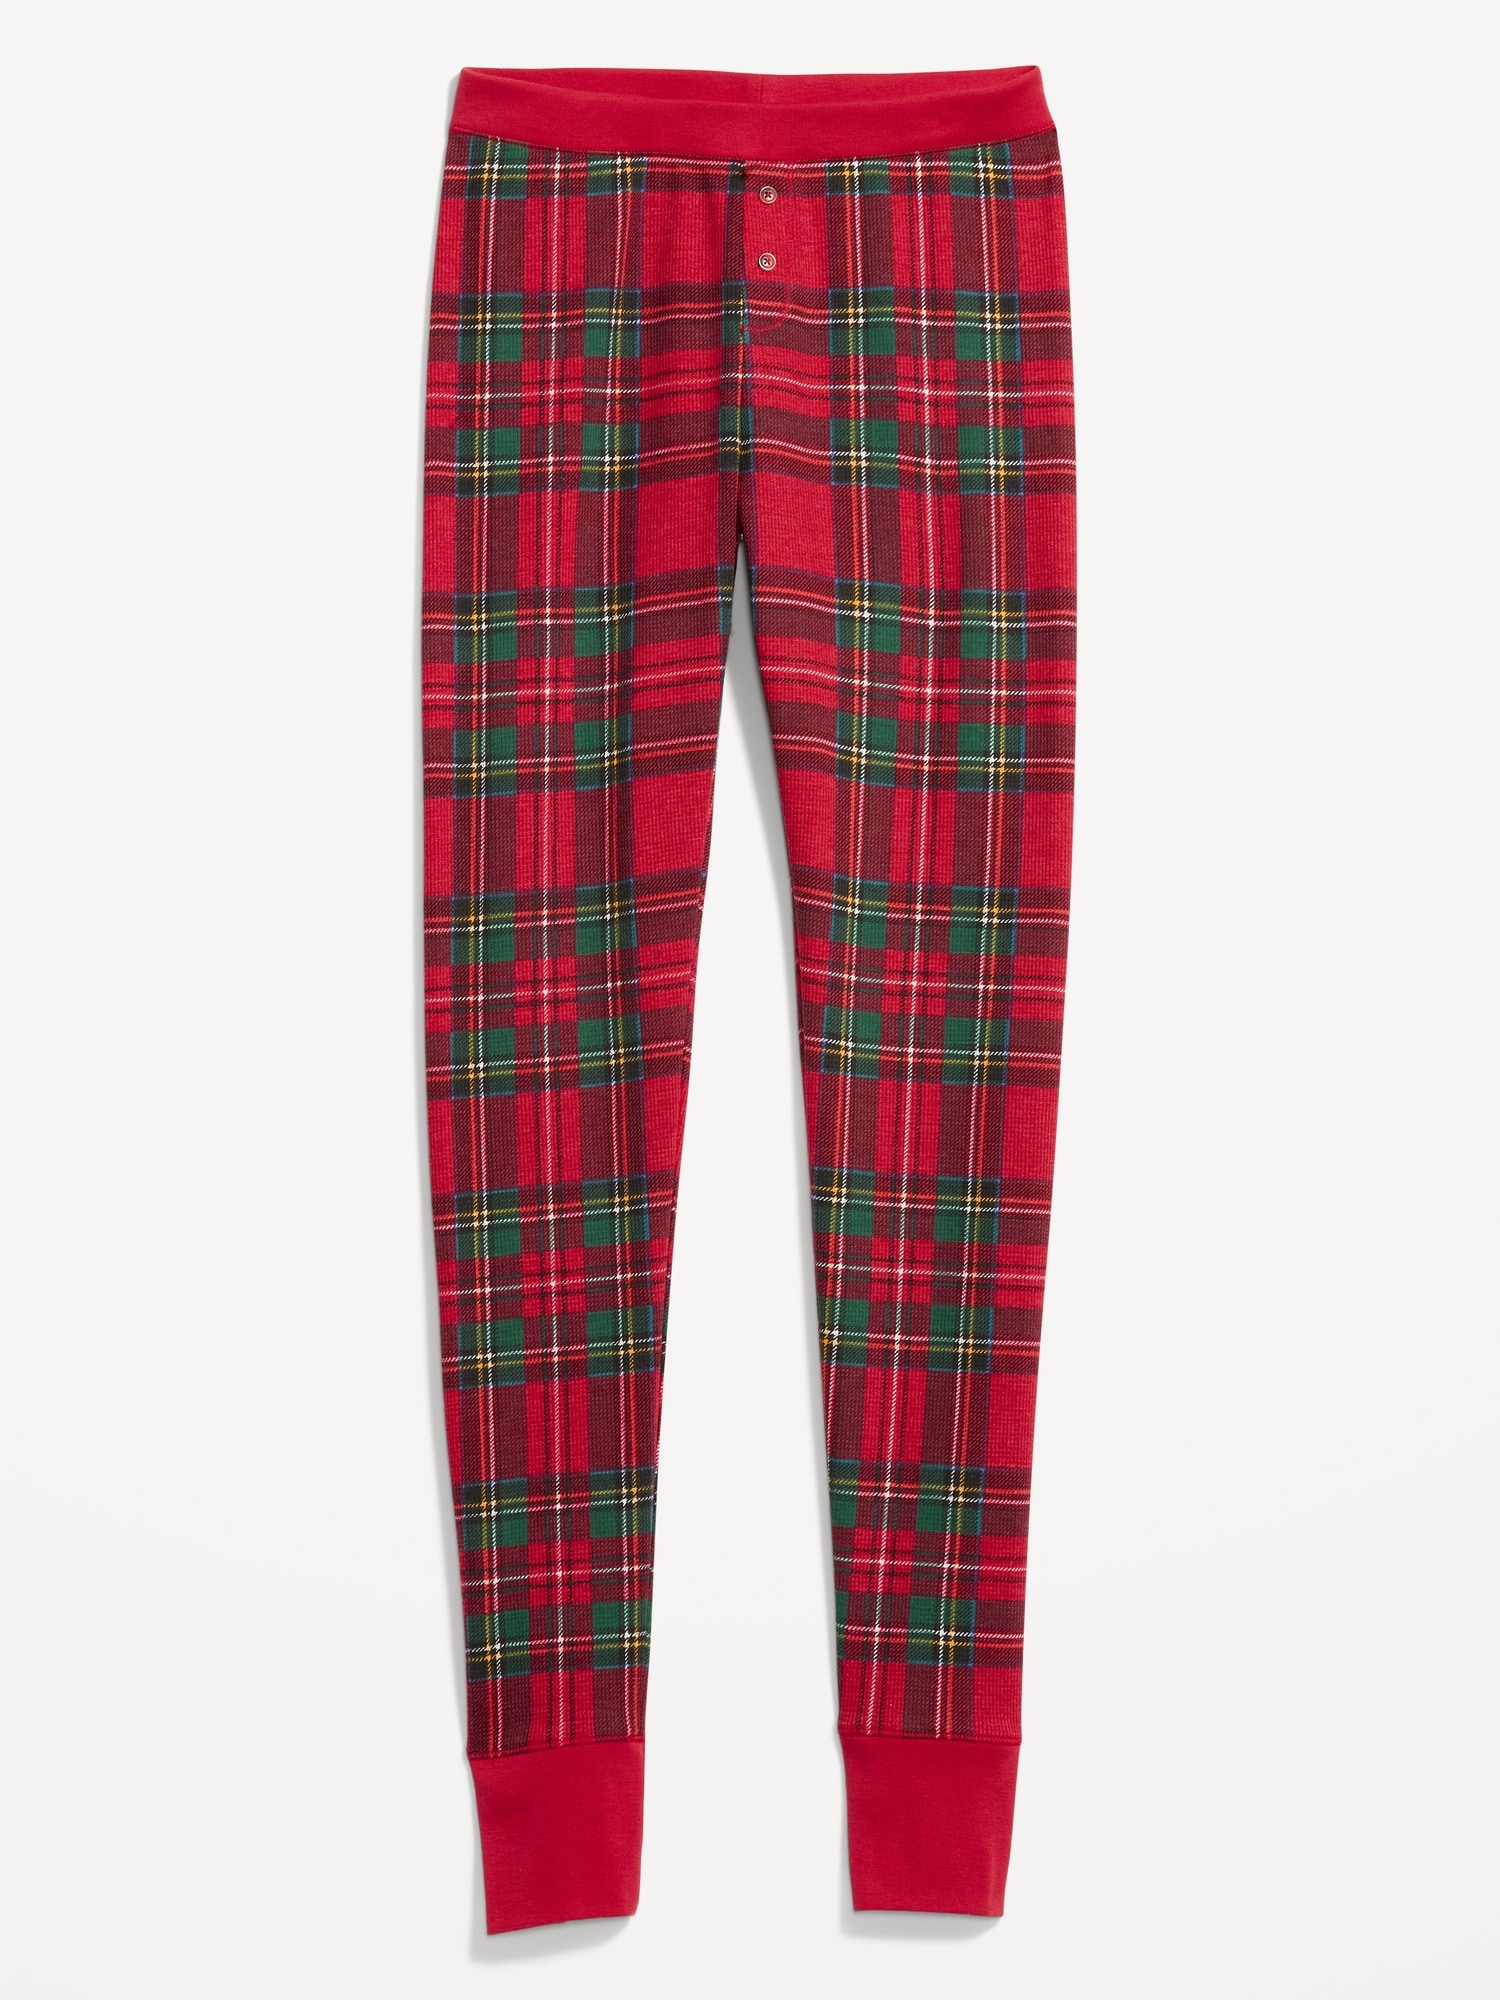 NWT Old Navy Seasonal Stripes Thermal Knit Pajama Pants Sleep Leggings Tall  M L